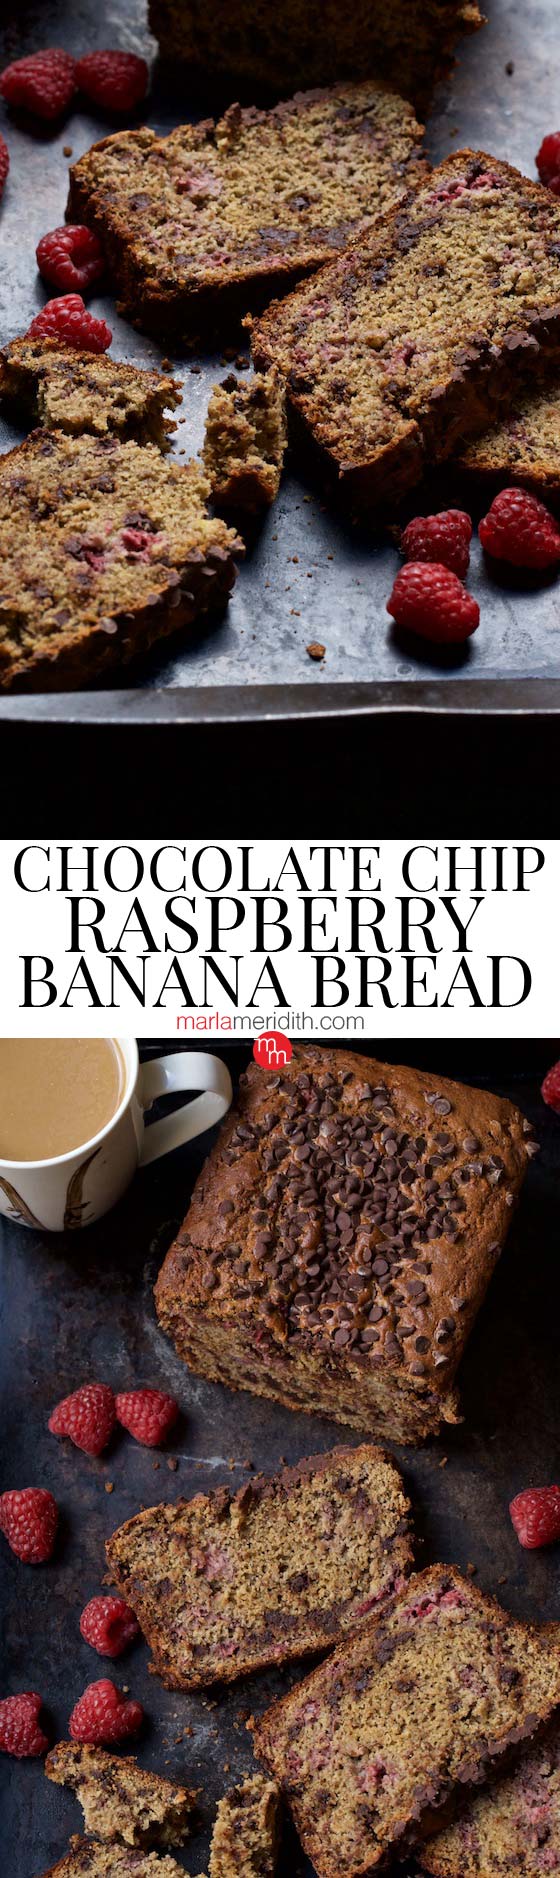 Chocolate Chip Raspberry Banana Bread recipe | MarlaMeridith.com 